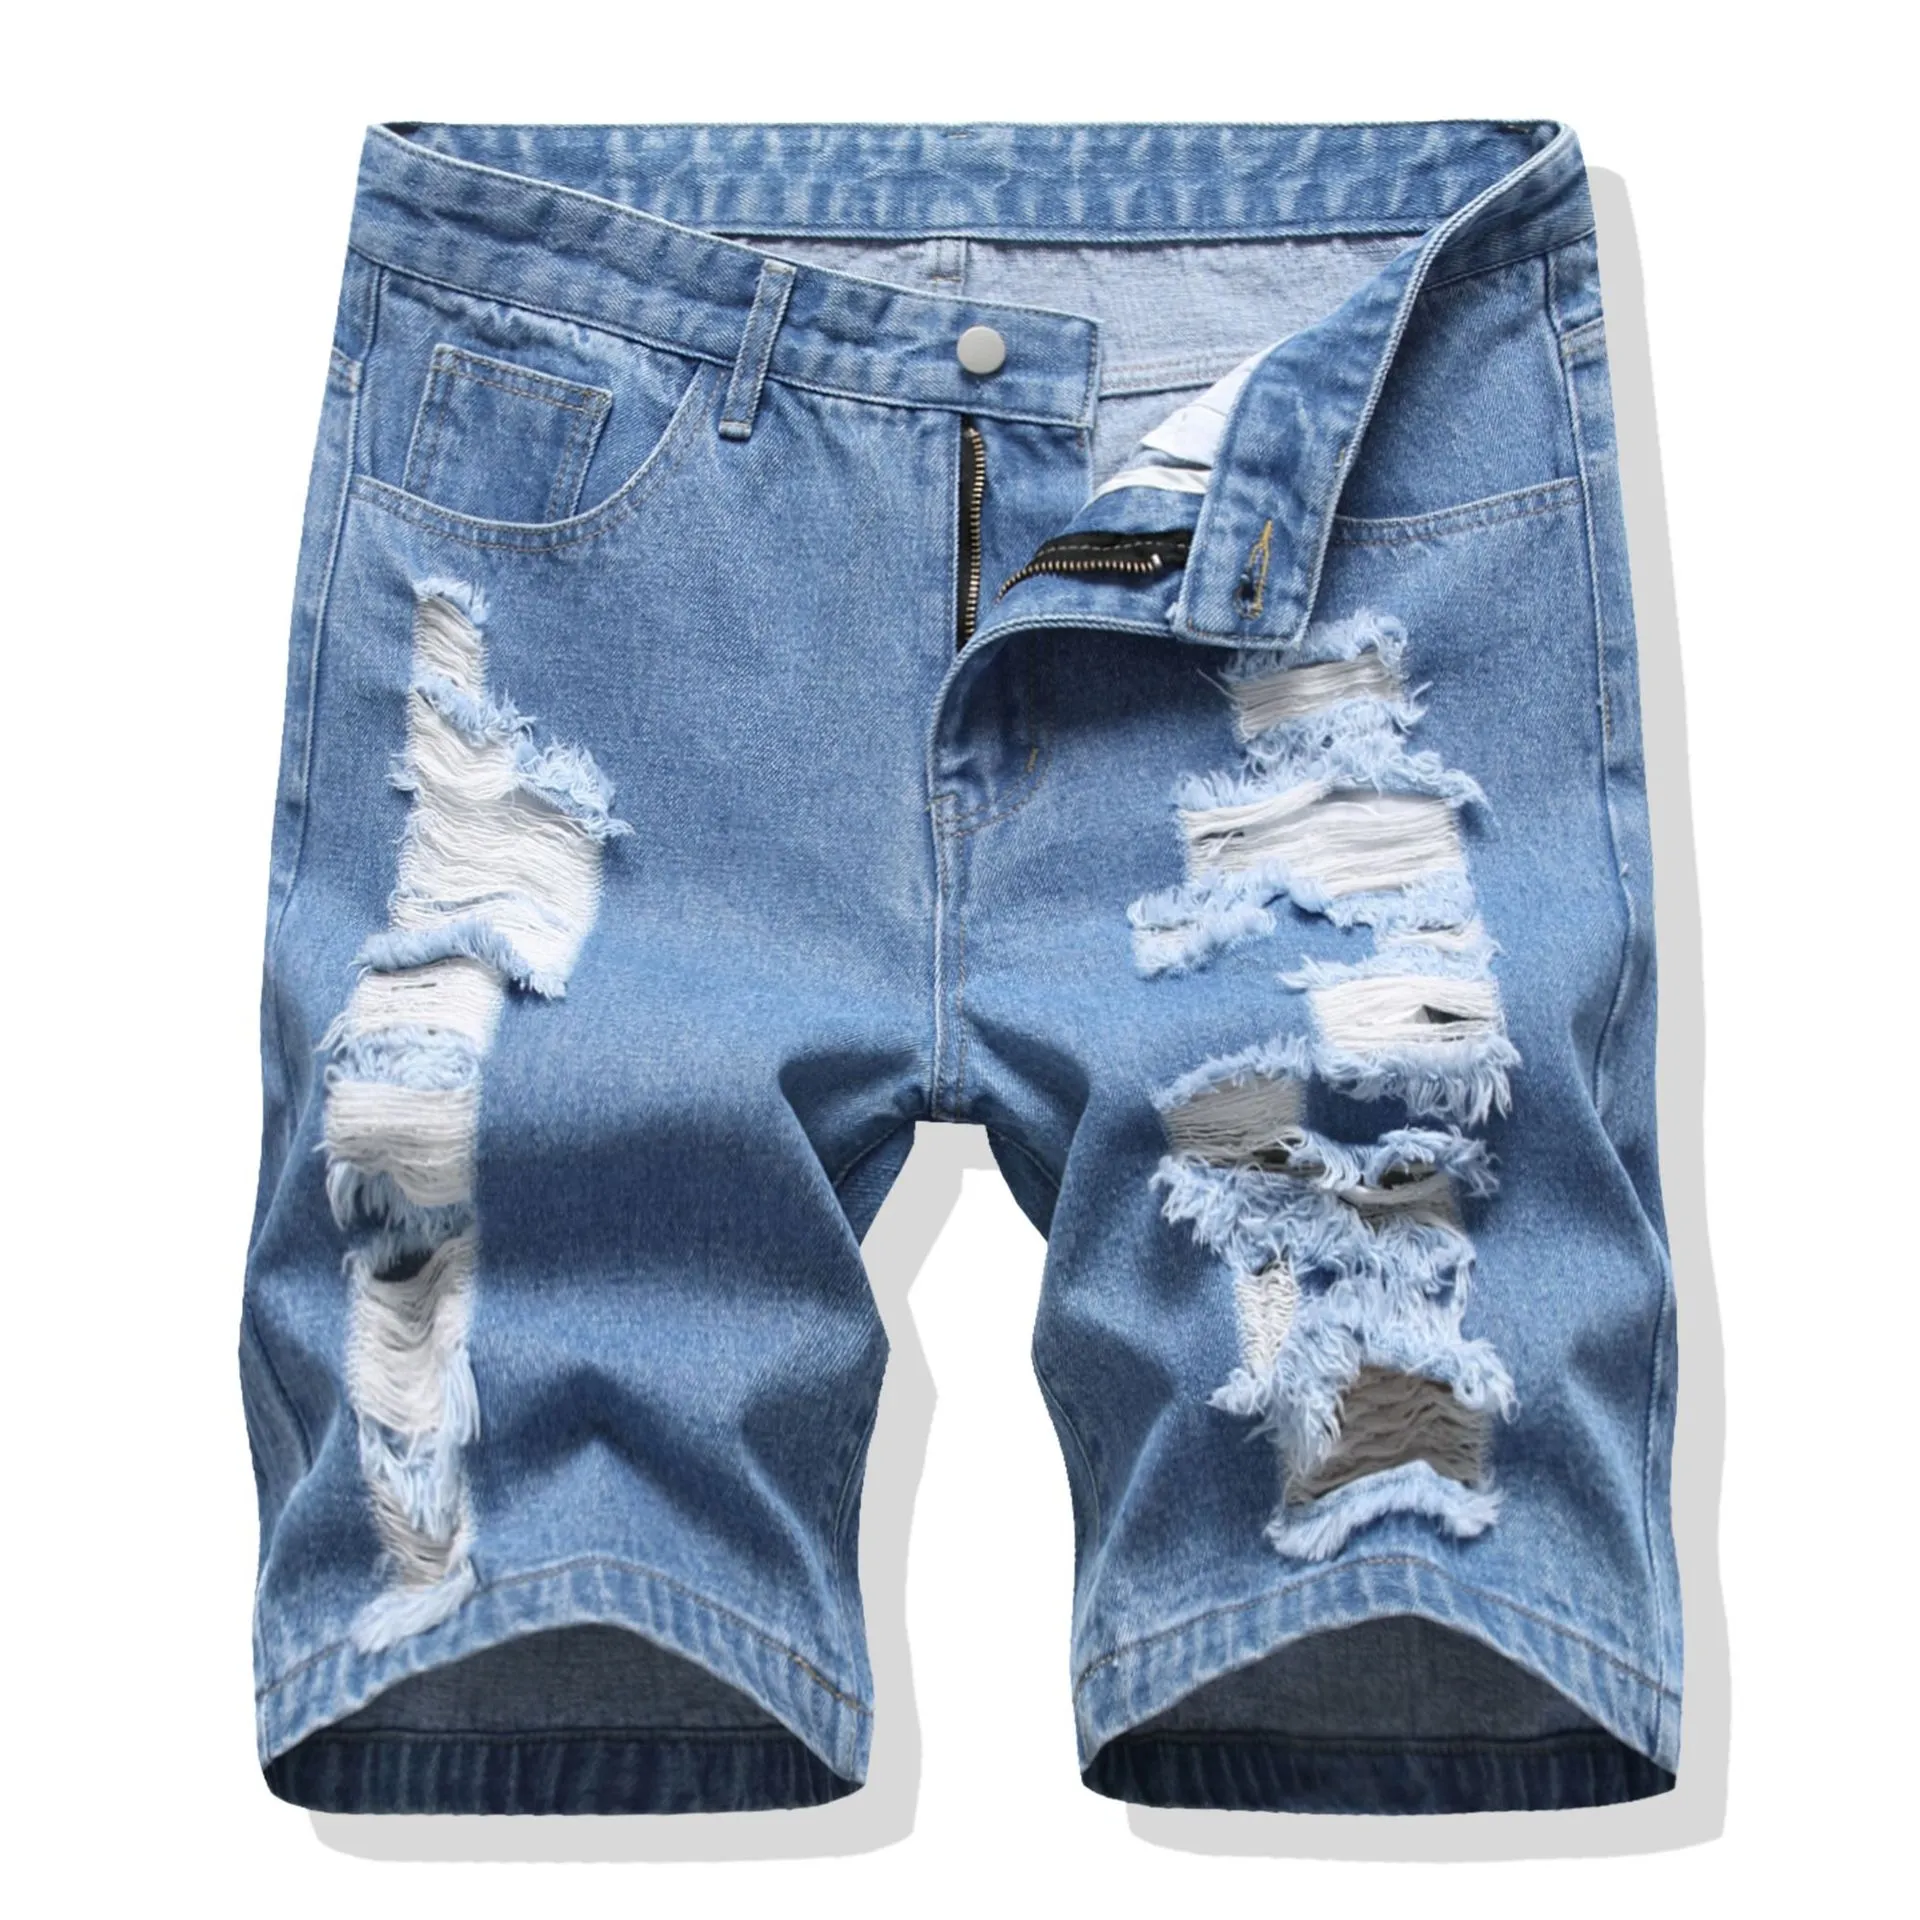 QWANG Men's Summer Casual Bright Shorts Ripped Dirty Washed Fashion Denim  Shorts - Walmart.com